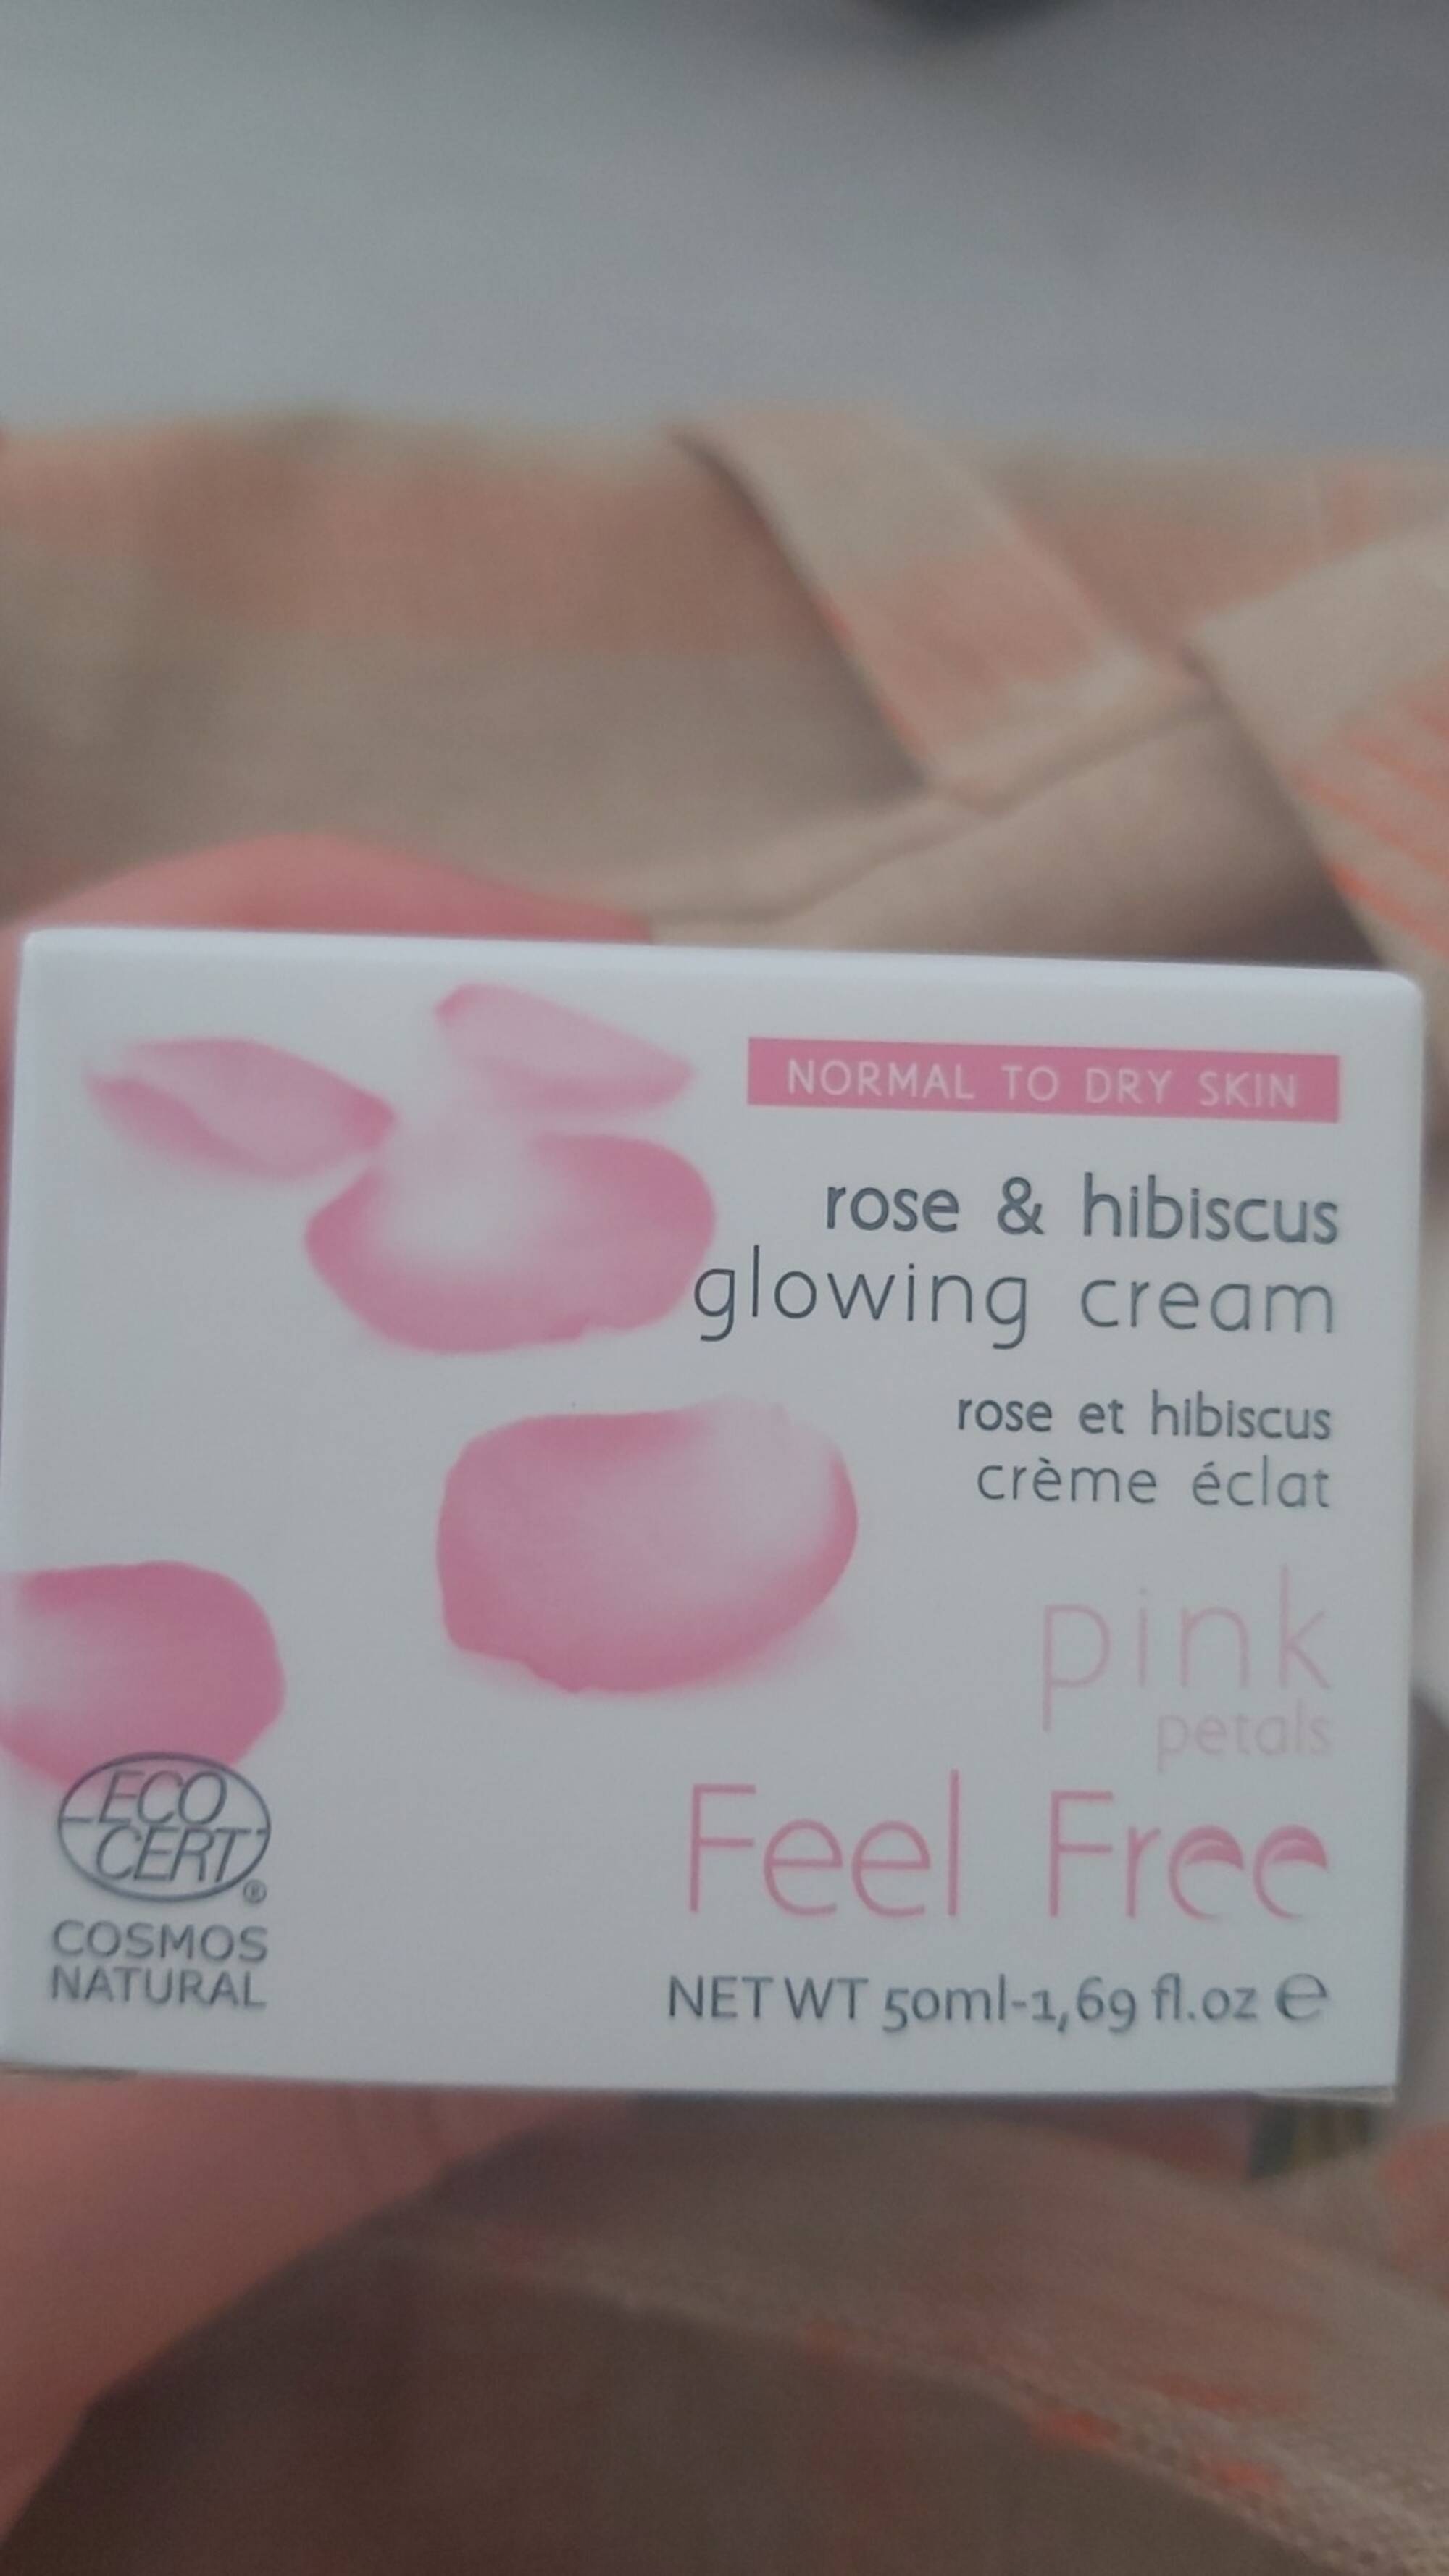 FEEL FREE - Pink petals - Glowing cream